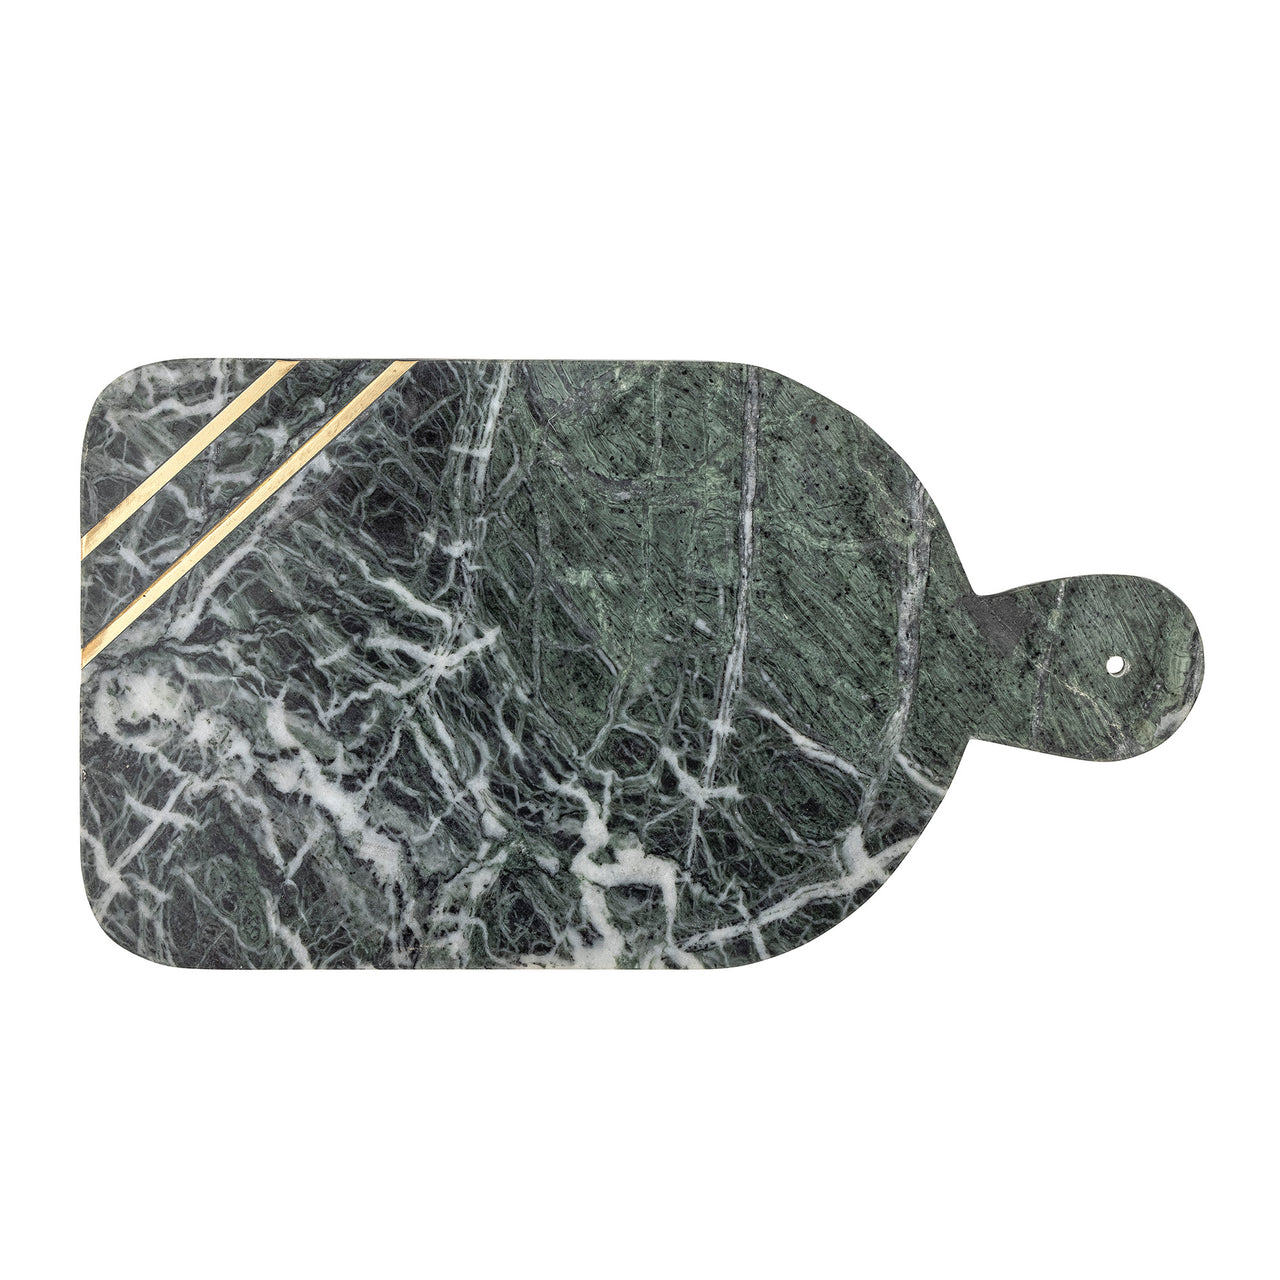 Adalin Cutting Board, Green, Marble